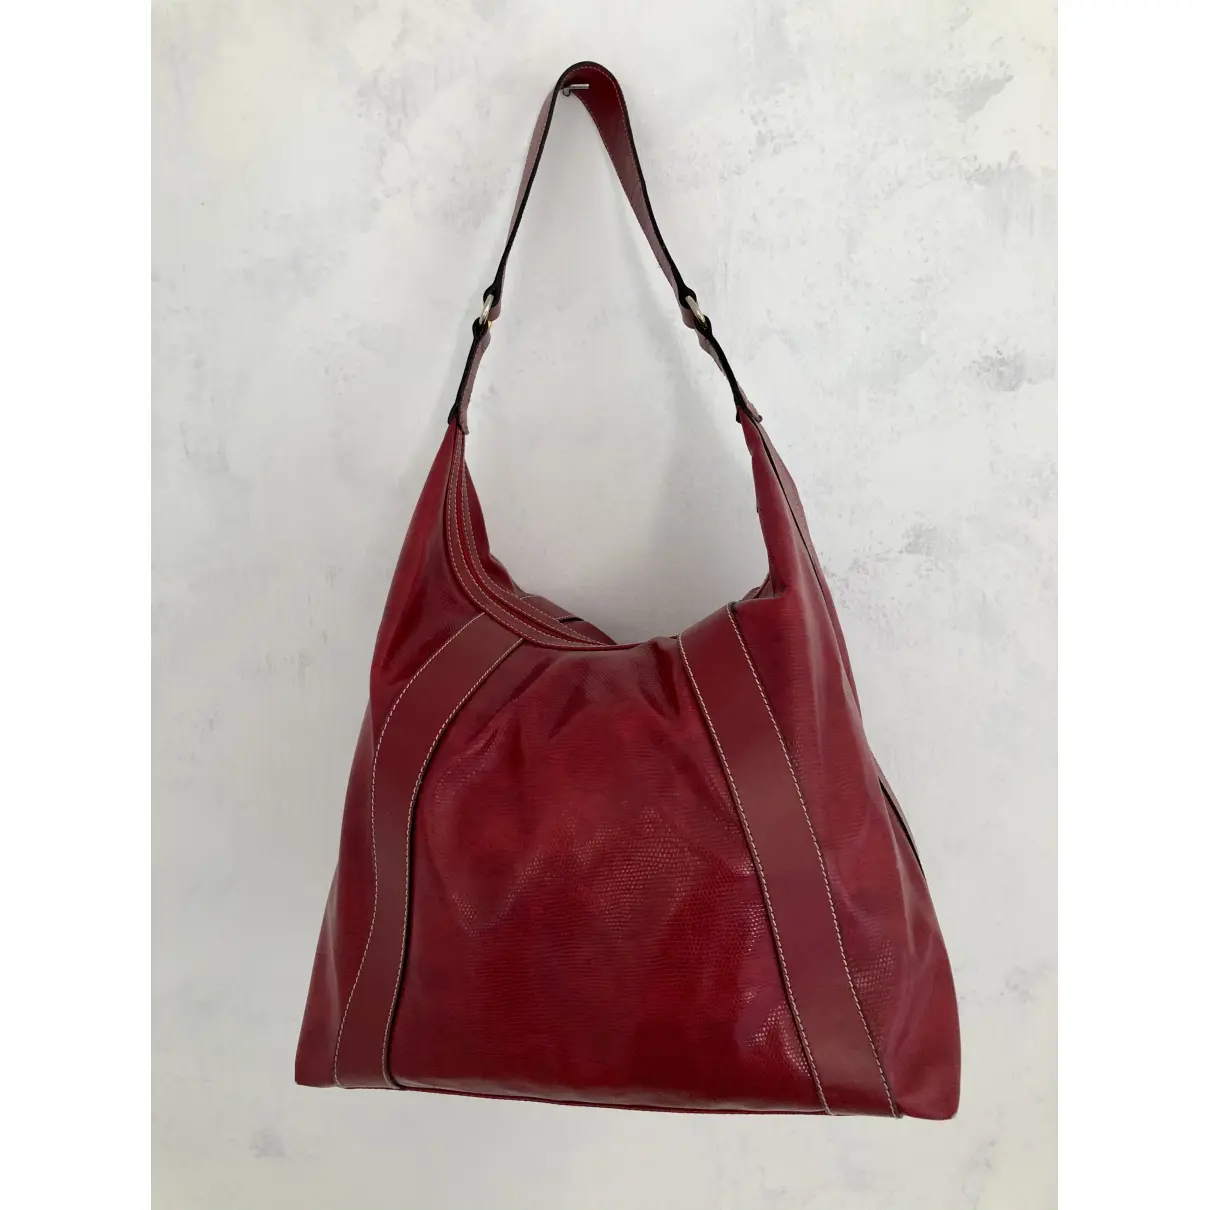 Buy Lancel Handbag online